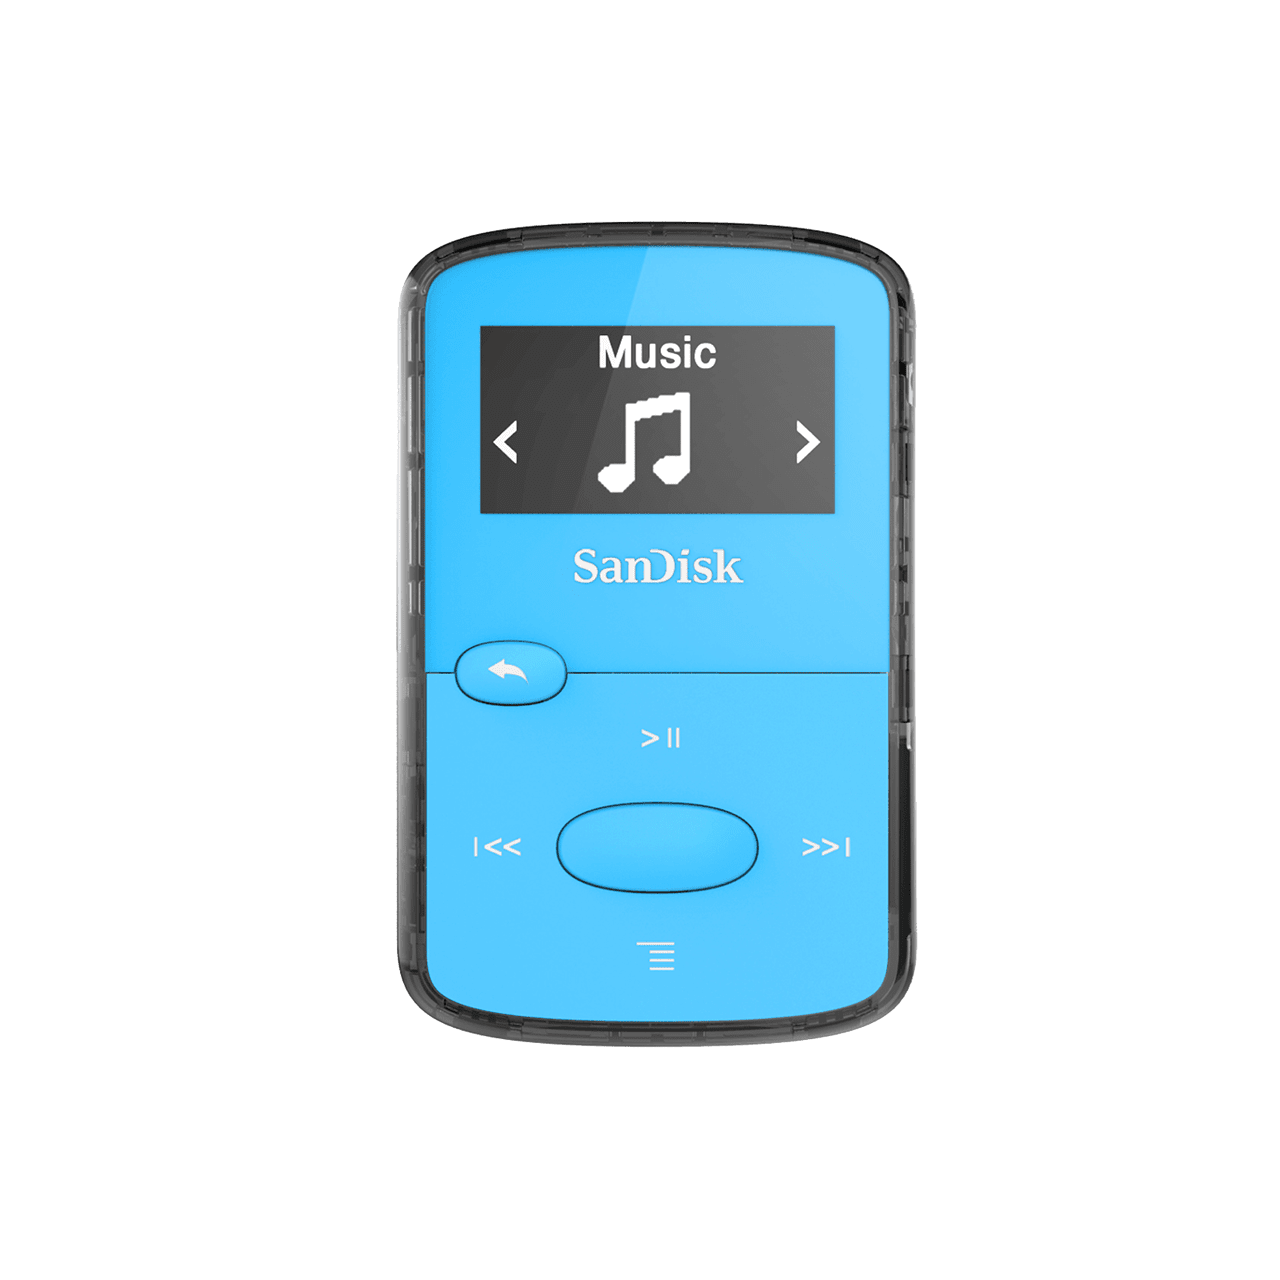 Sandisk Clip Jam Mp3 Player